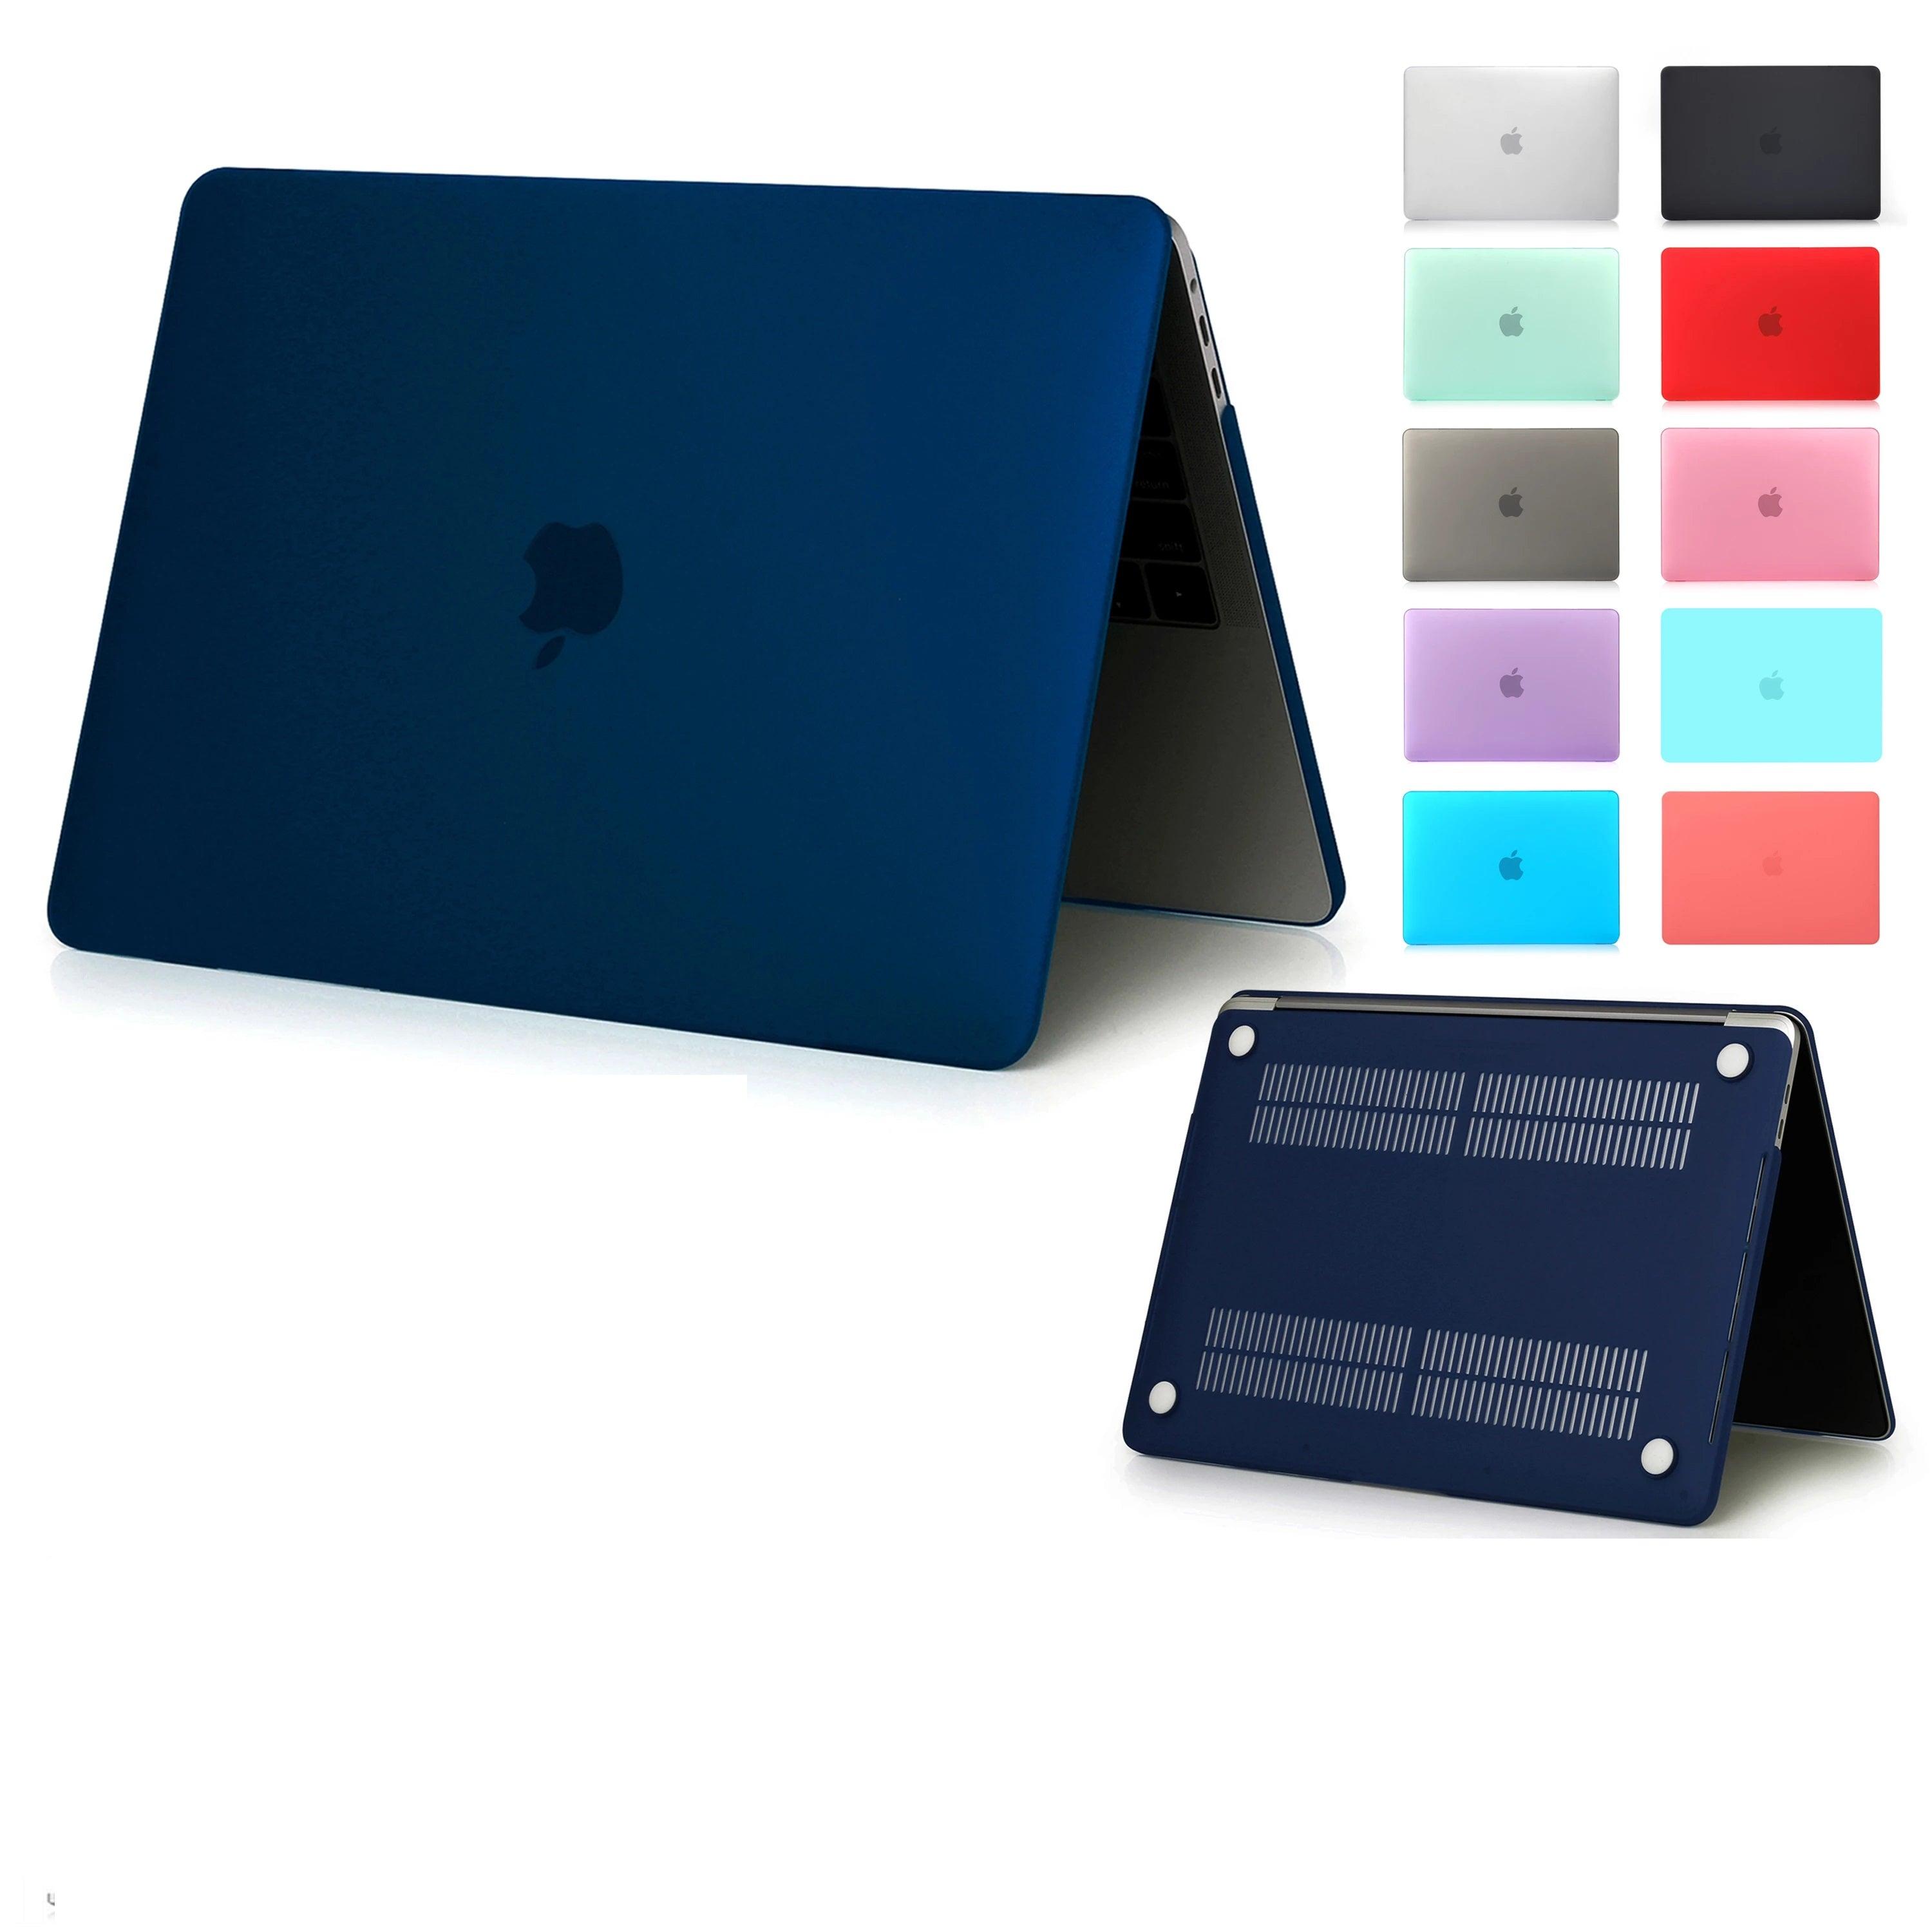 High-quality Case for Apple MacBook - M1 Air13 Pro 11, 12, 13, 14, 15, 16-inch - dealskart.com.au